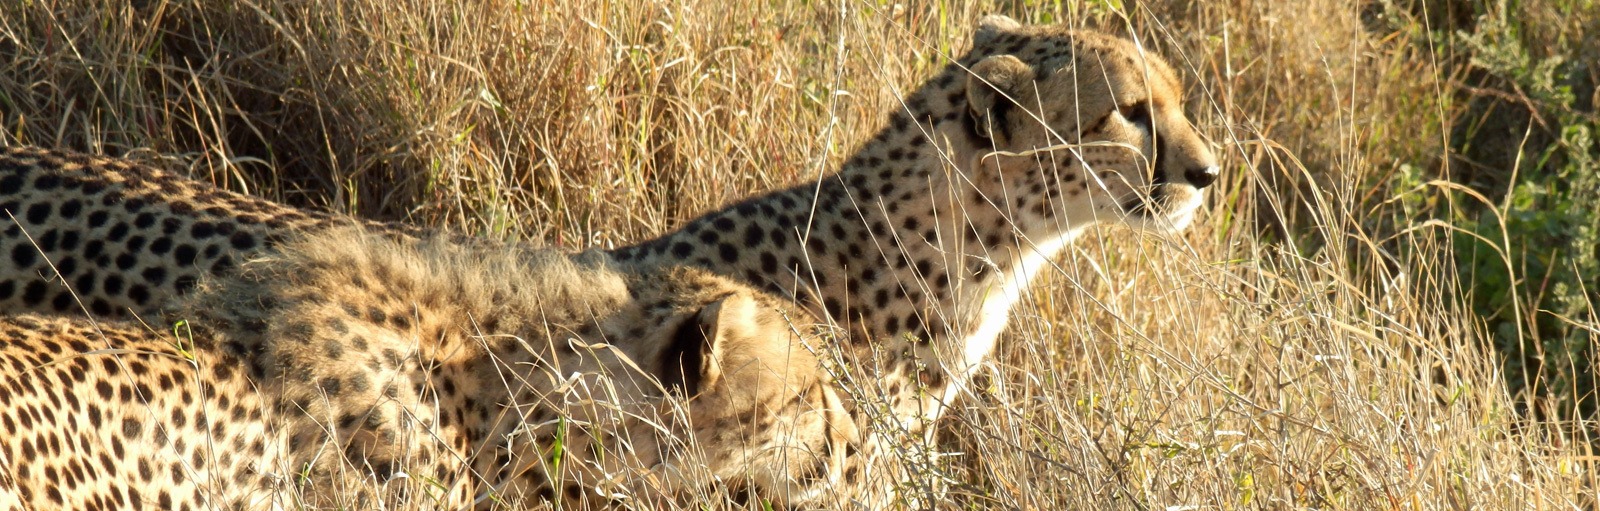 Loliondo, Serengeti, Tanzania